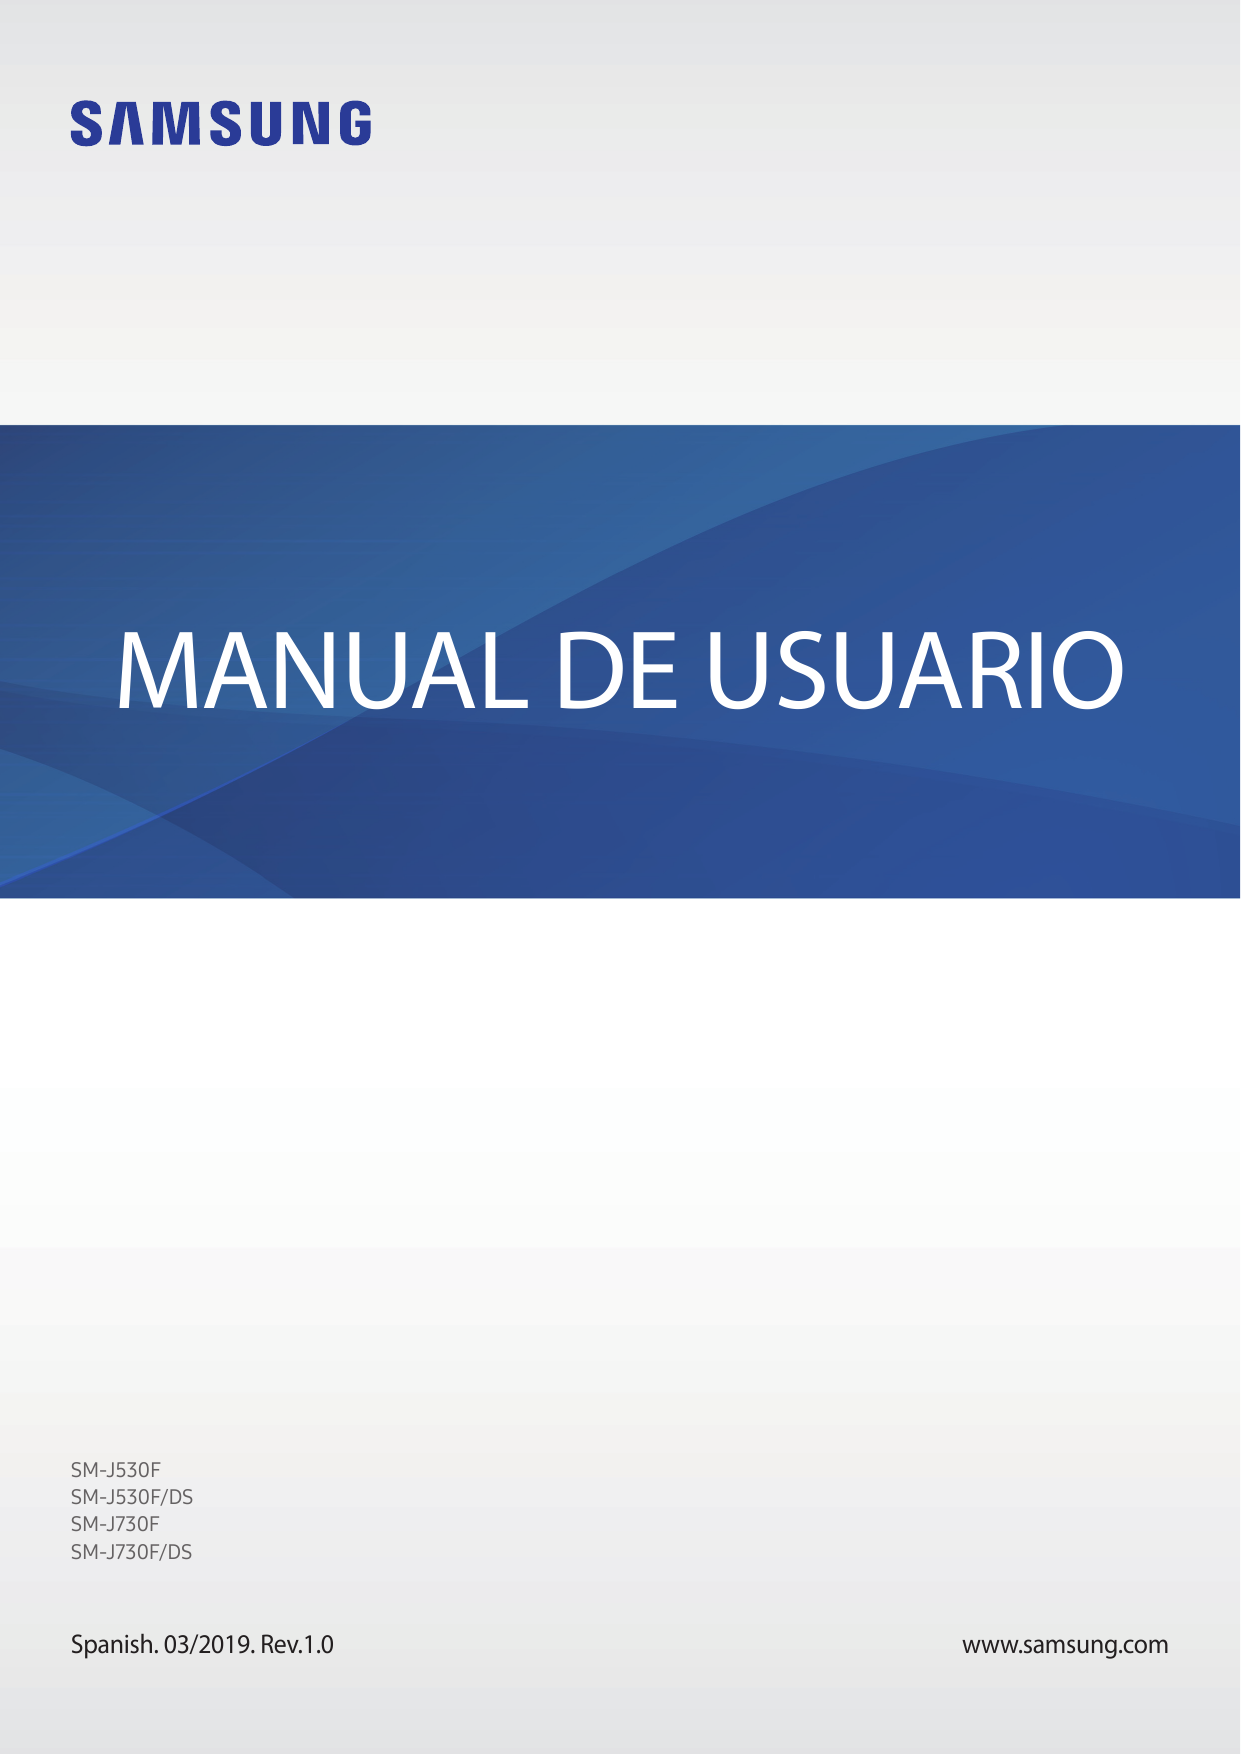 MANUAL DE USUARIOSM-J530FSM-J530F/DSSM-J730FSM-J730F/DSSpanish. 03/2019. Rev.1.0www.samsung.com